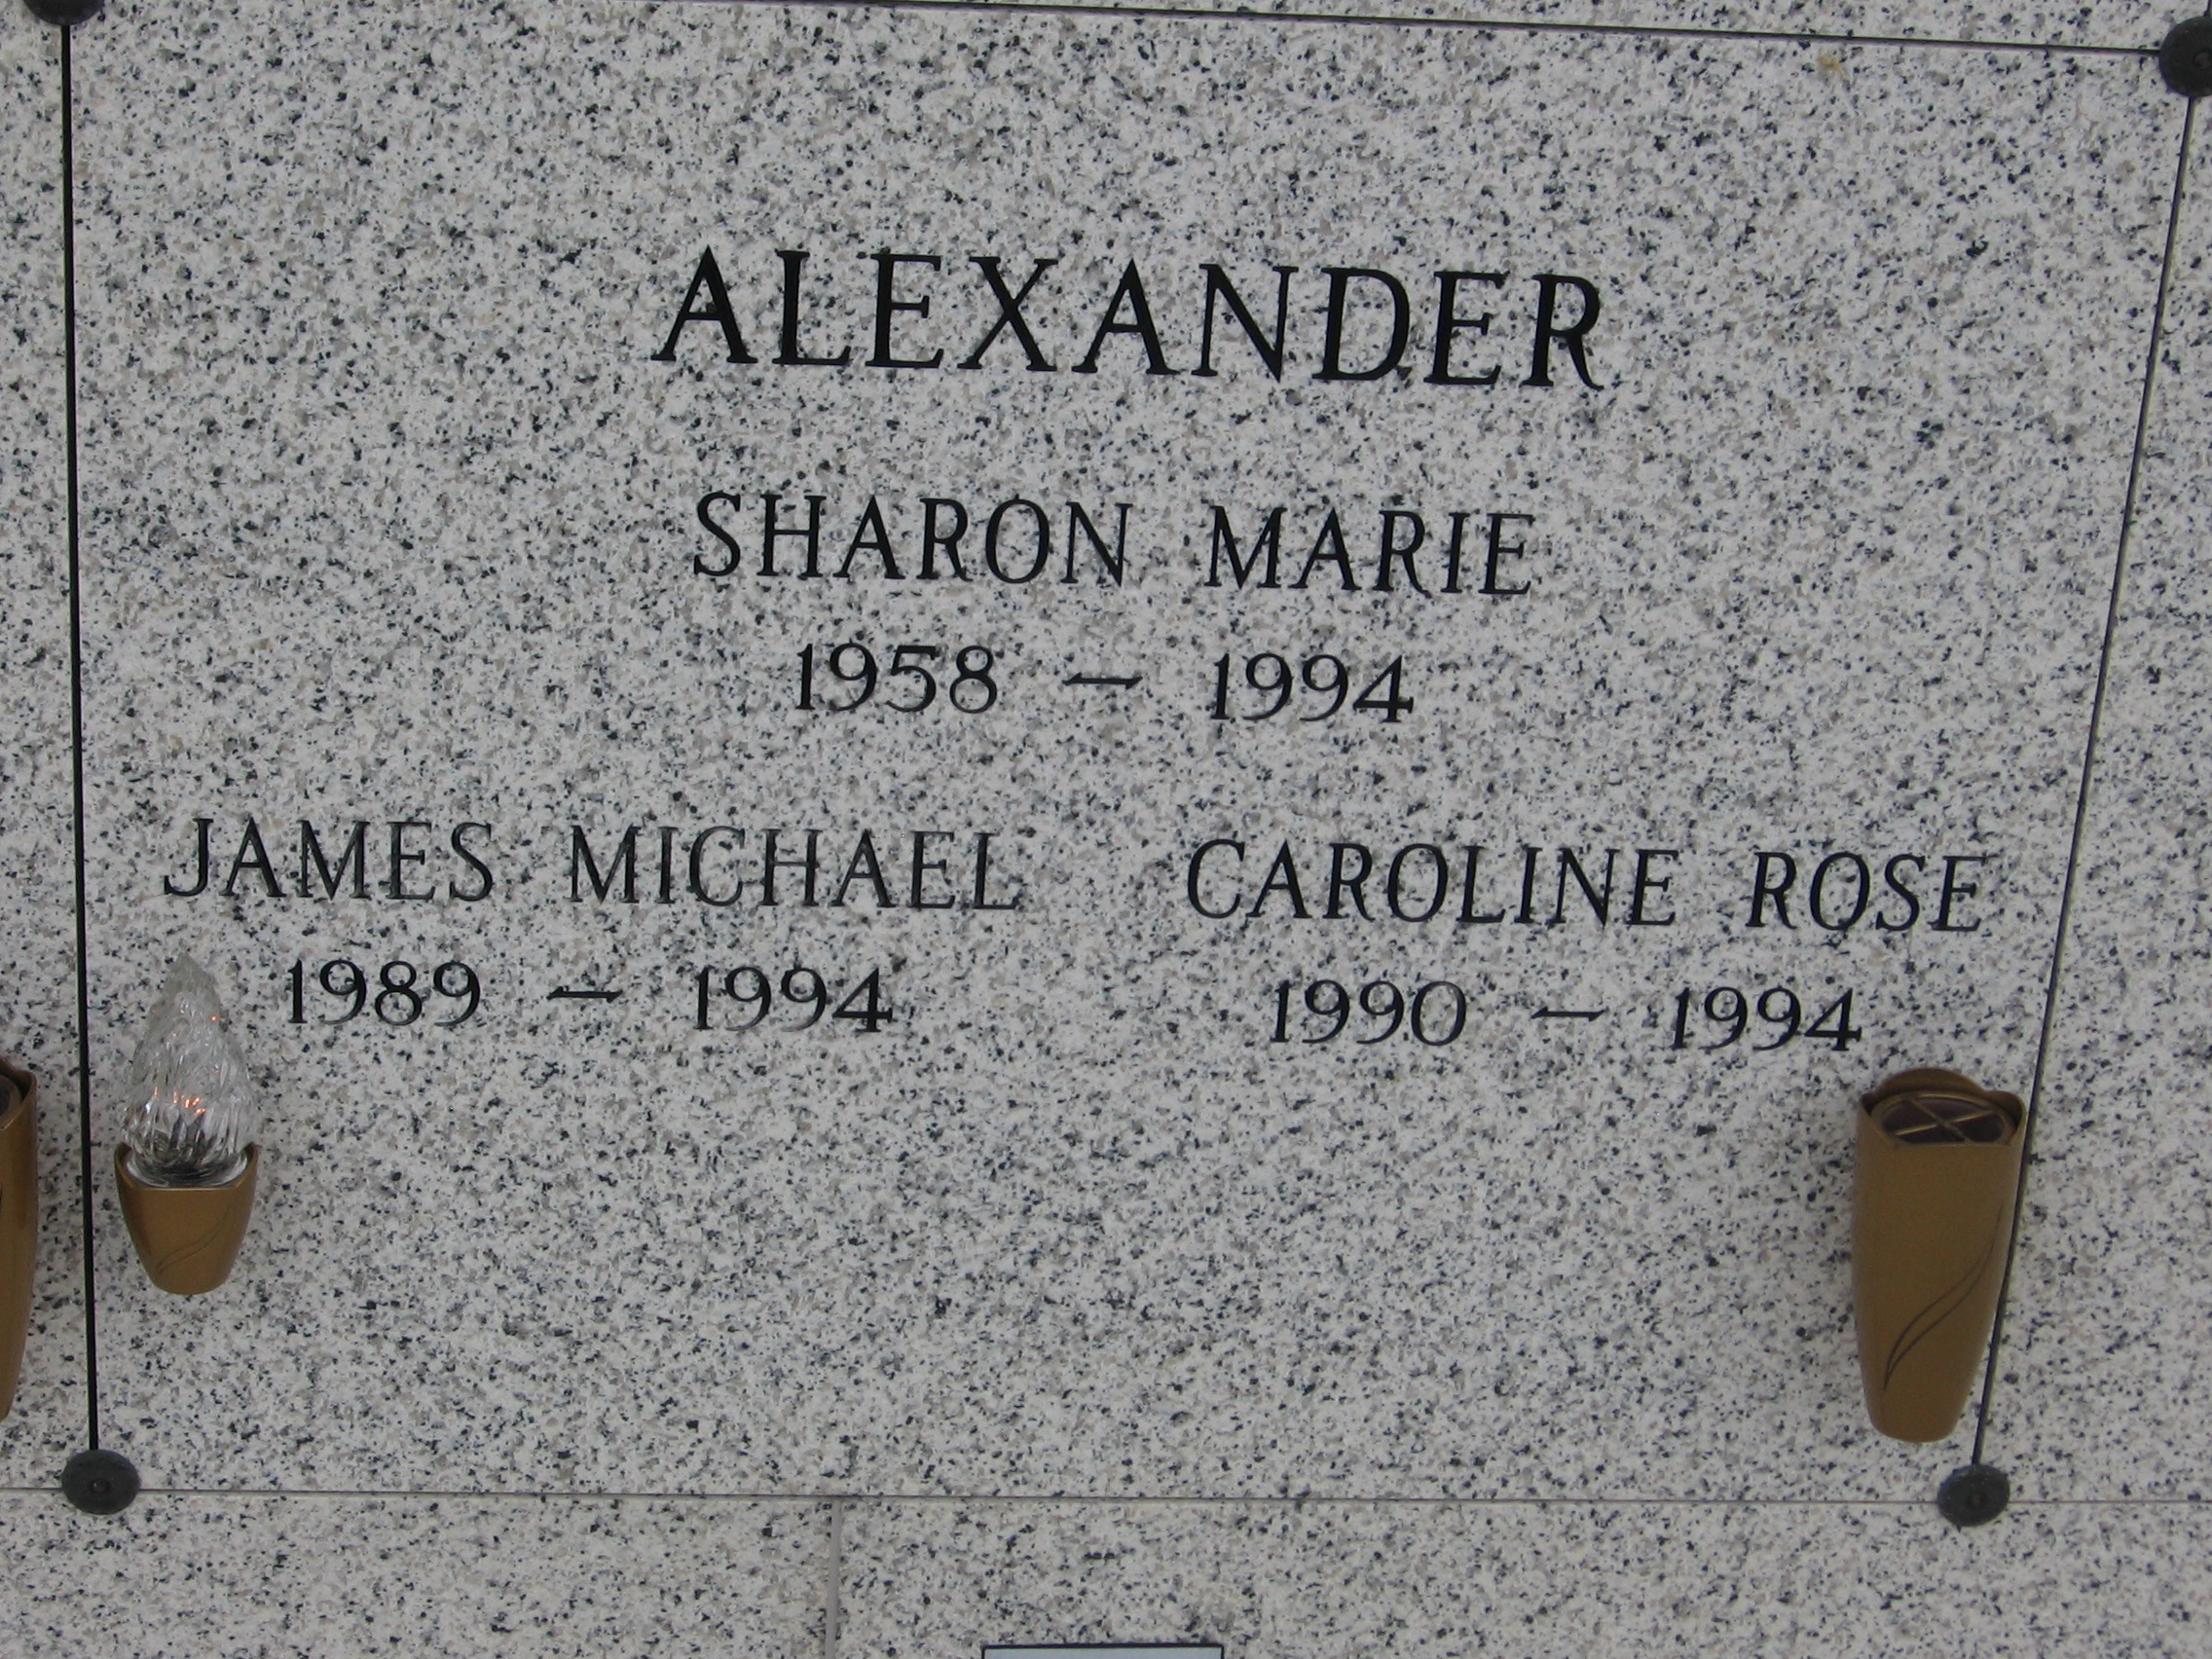 Sharon Marie Alexander